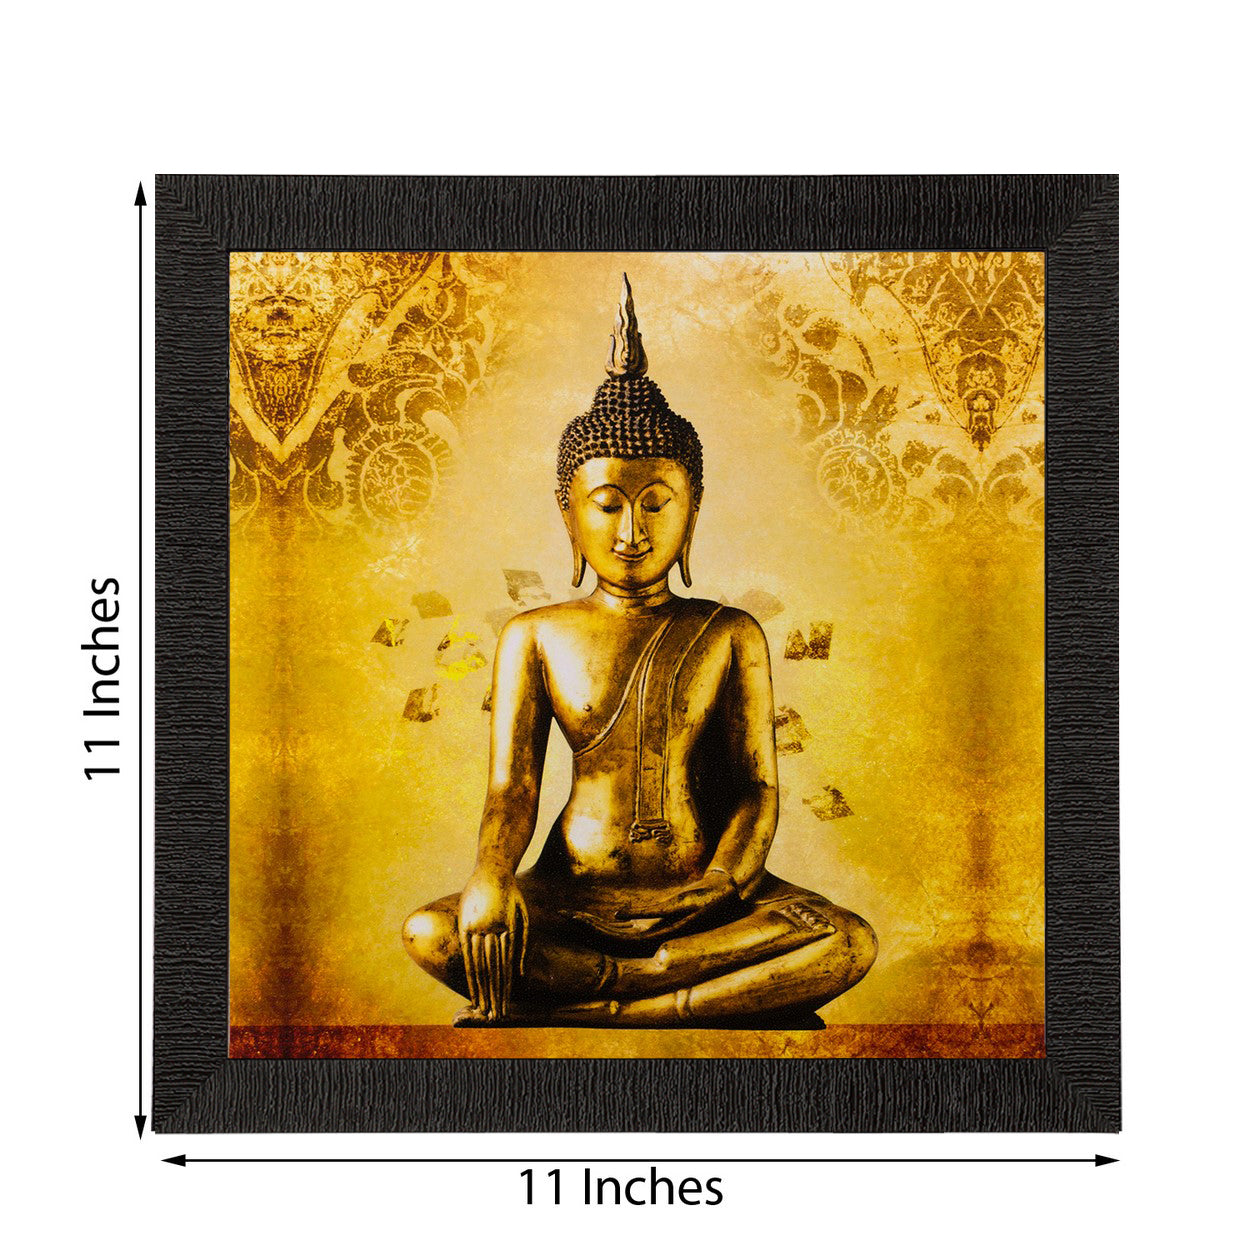 Meditating Buddha Painting Digital Printed Religious Wall Art 3